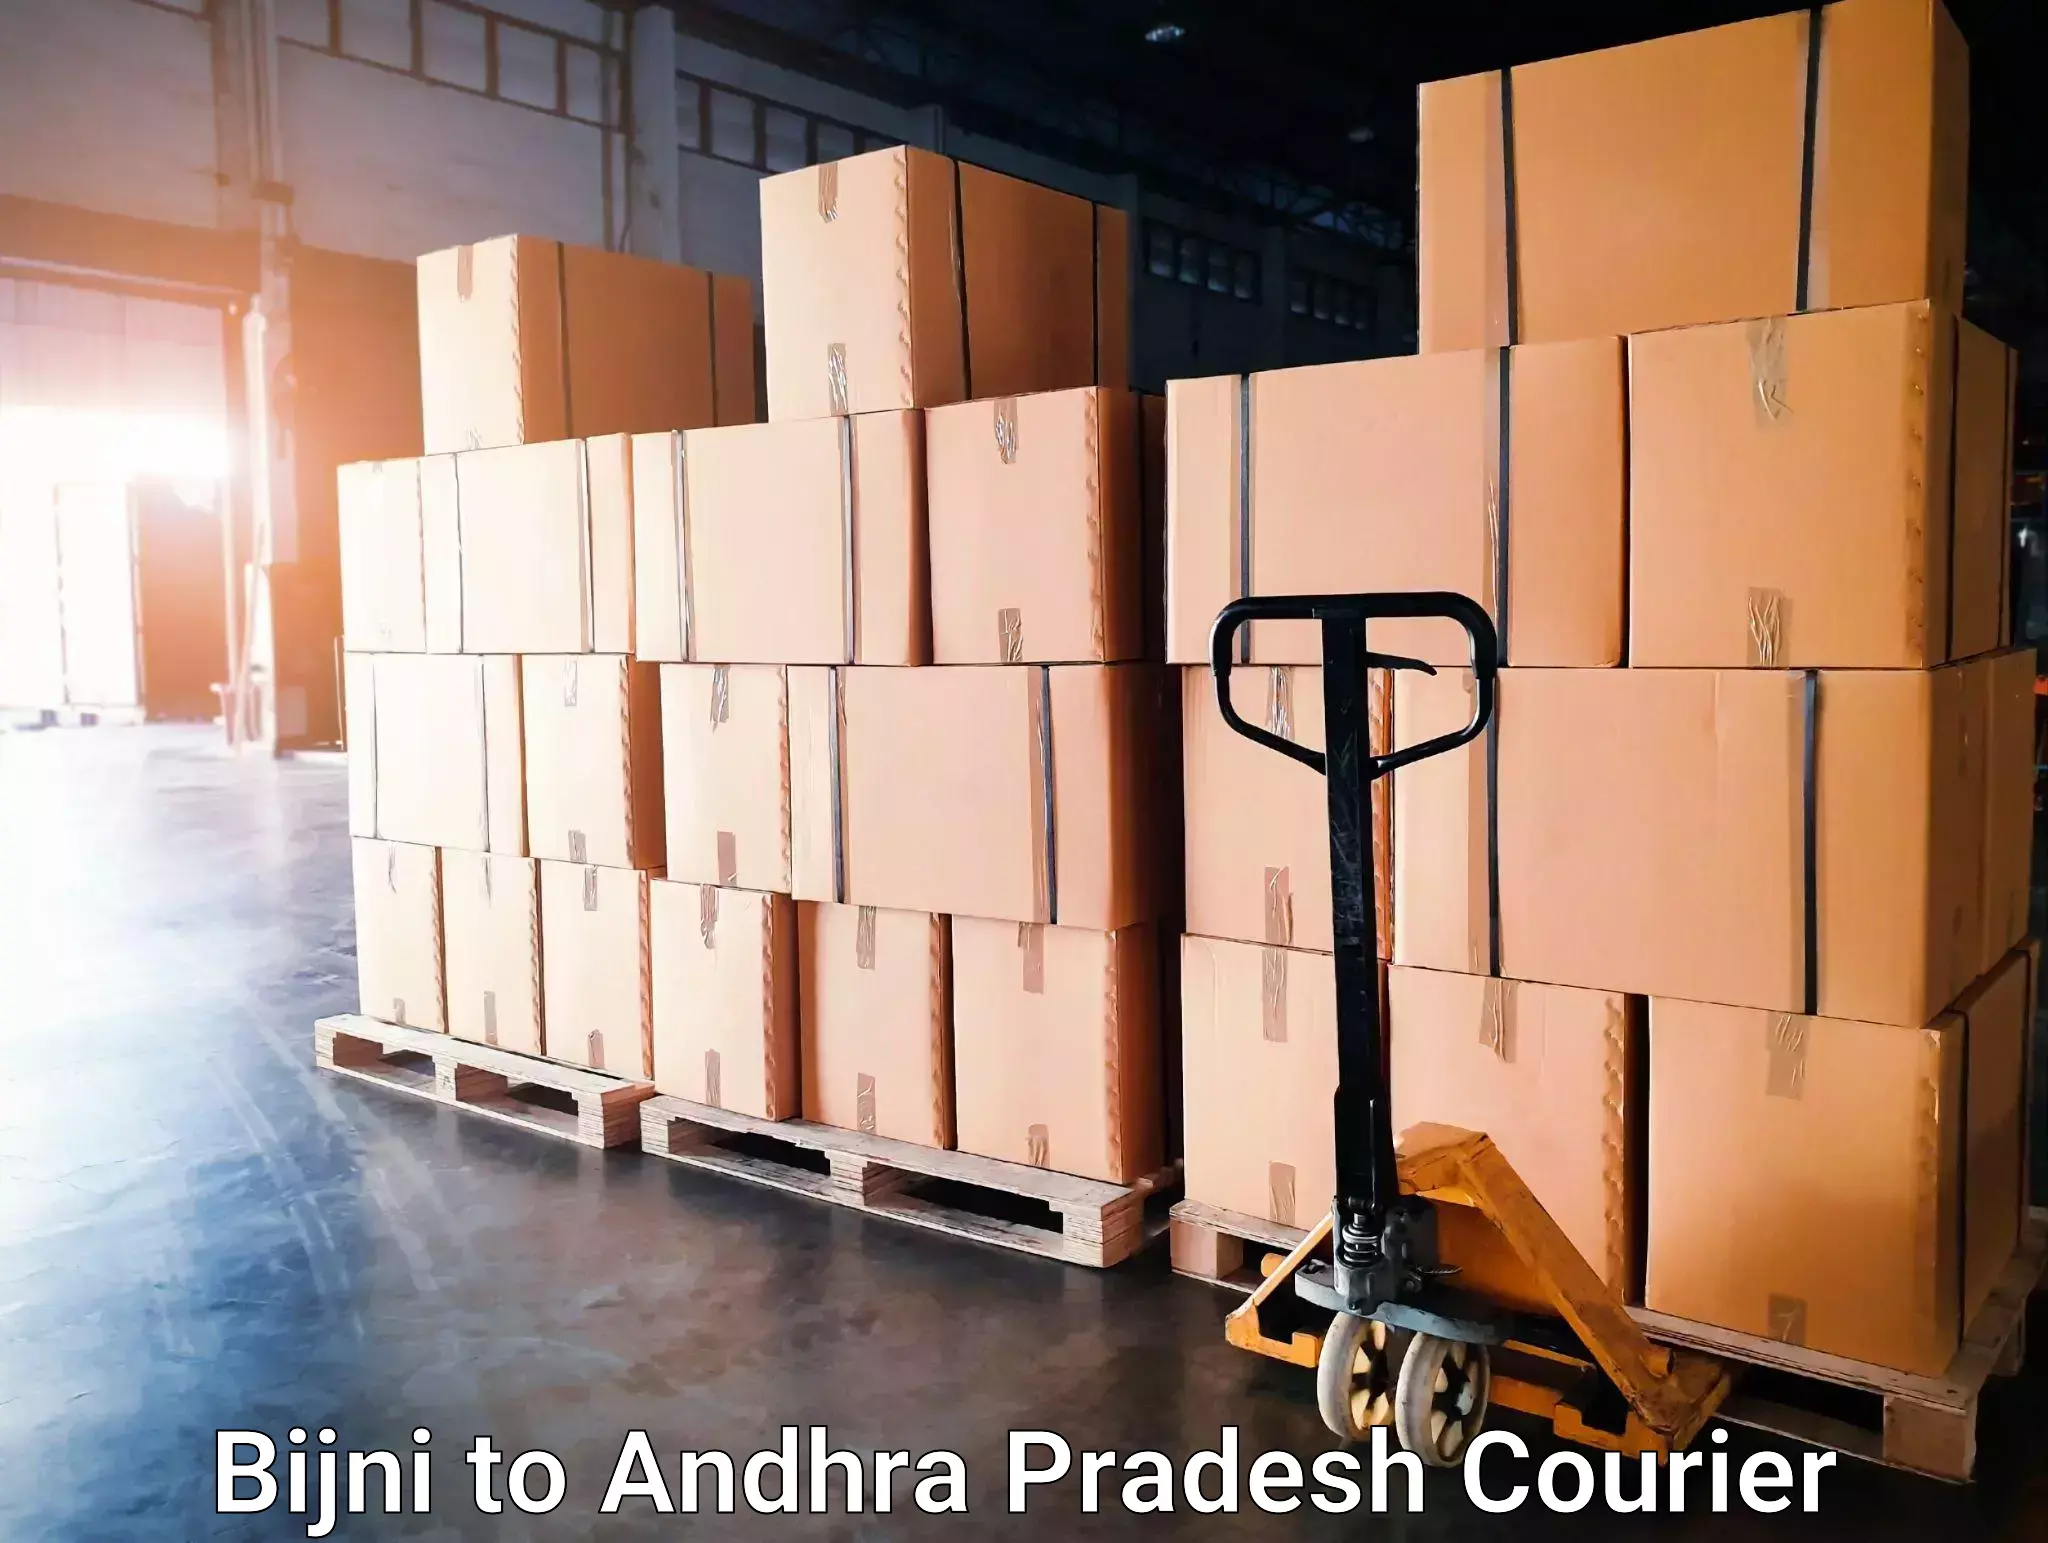 Cash on delivery service in Bijni to Andhra Pradesh